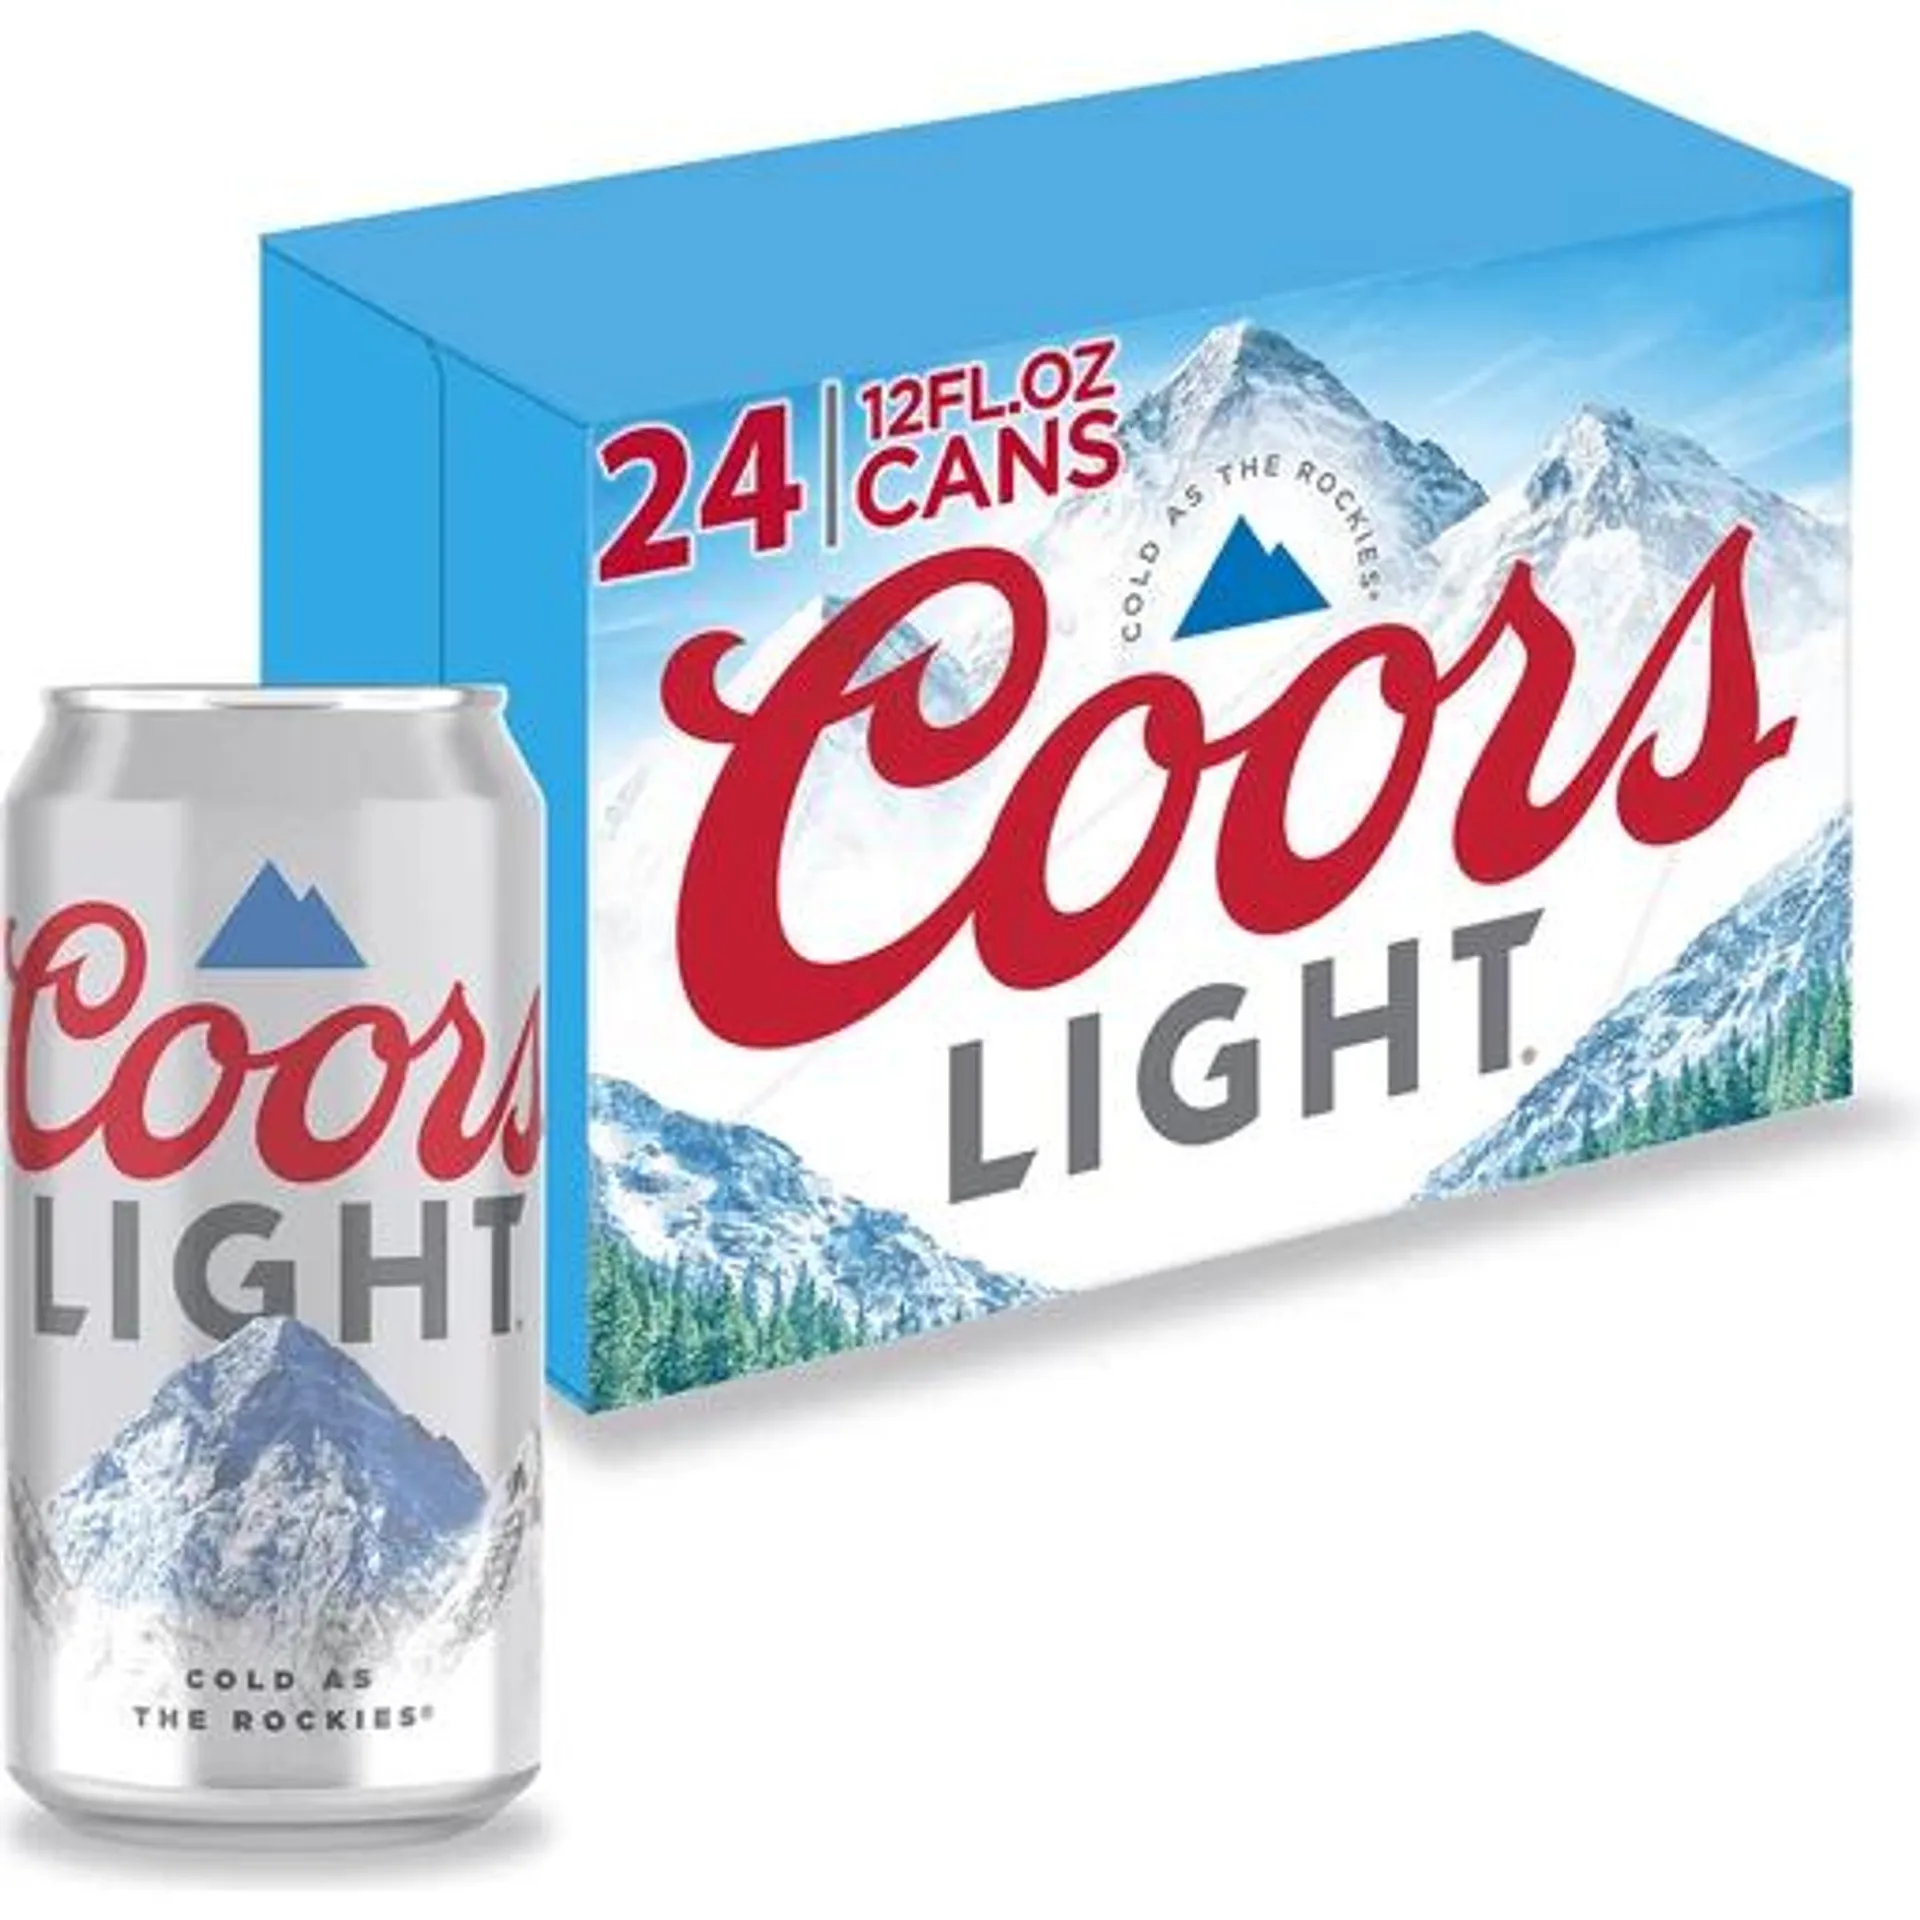 Coors Light Lager Beer, 24 Pack, 12 fl. oz. Cans, 4.2% ABV